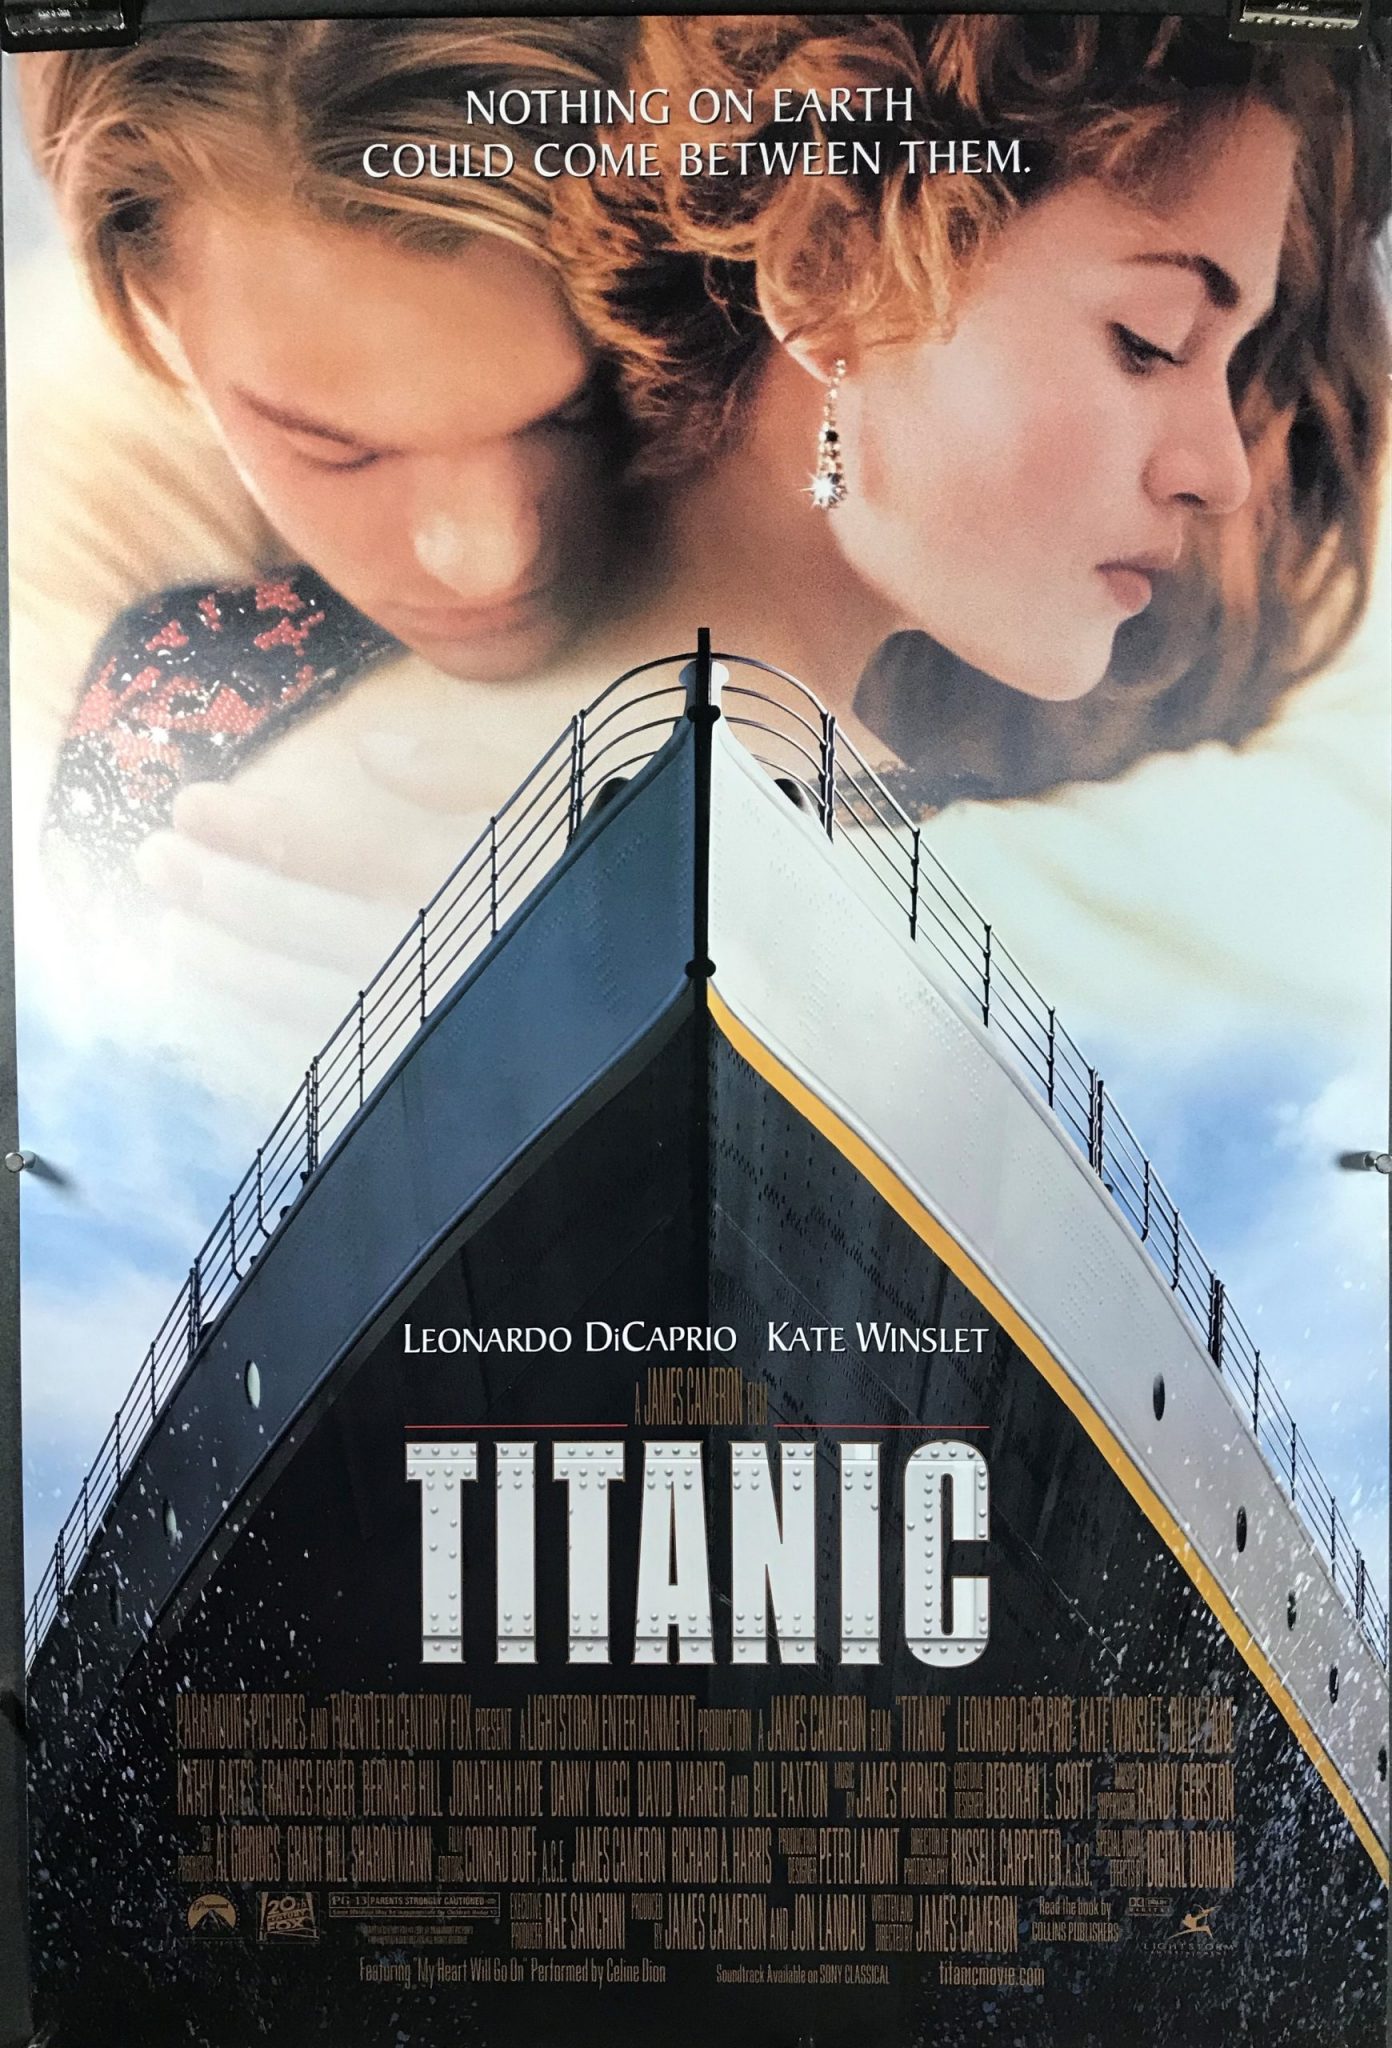 film review of titanic